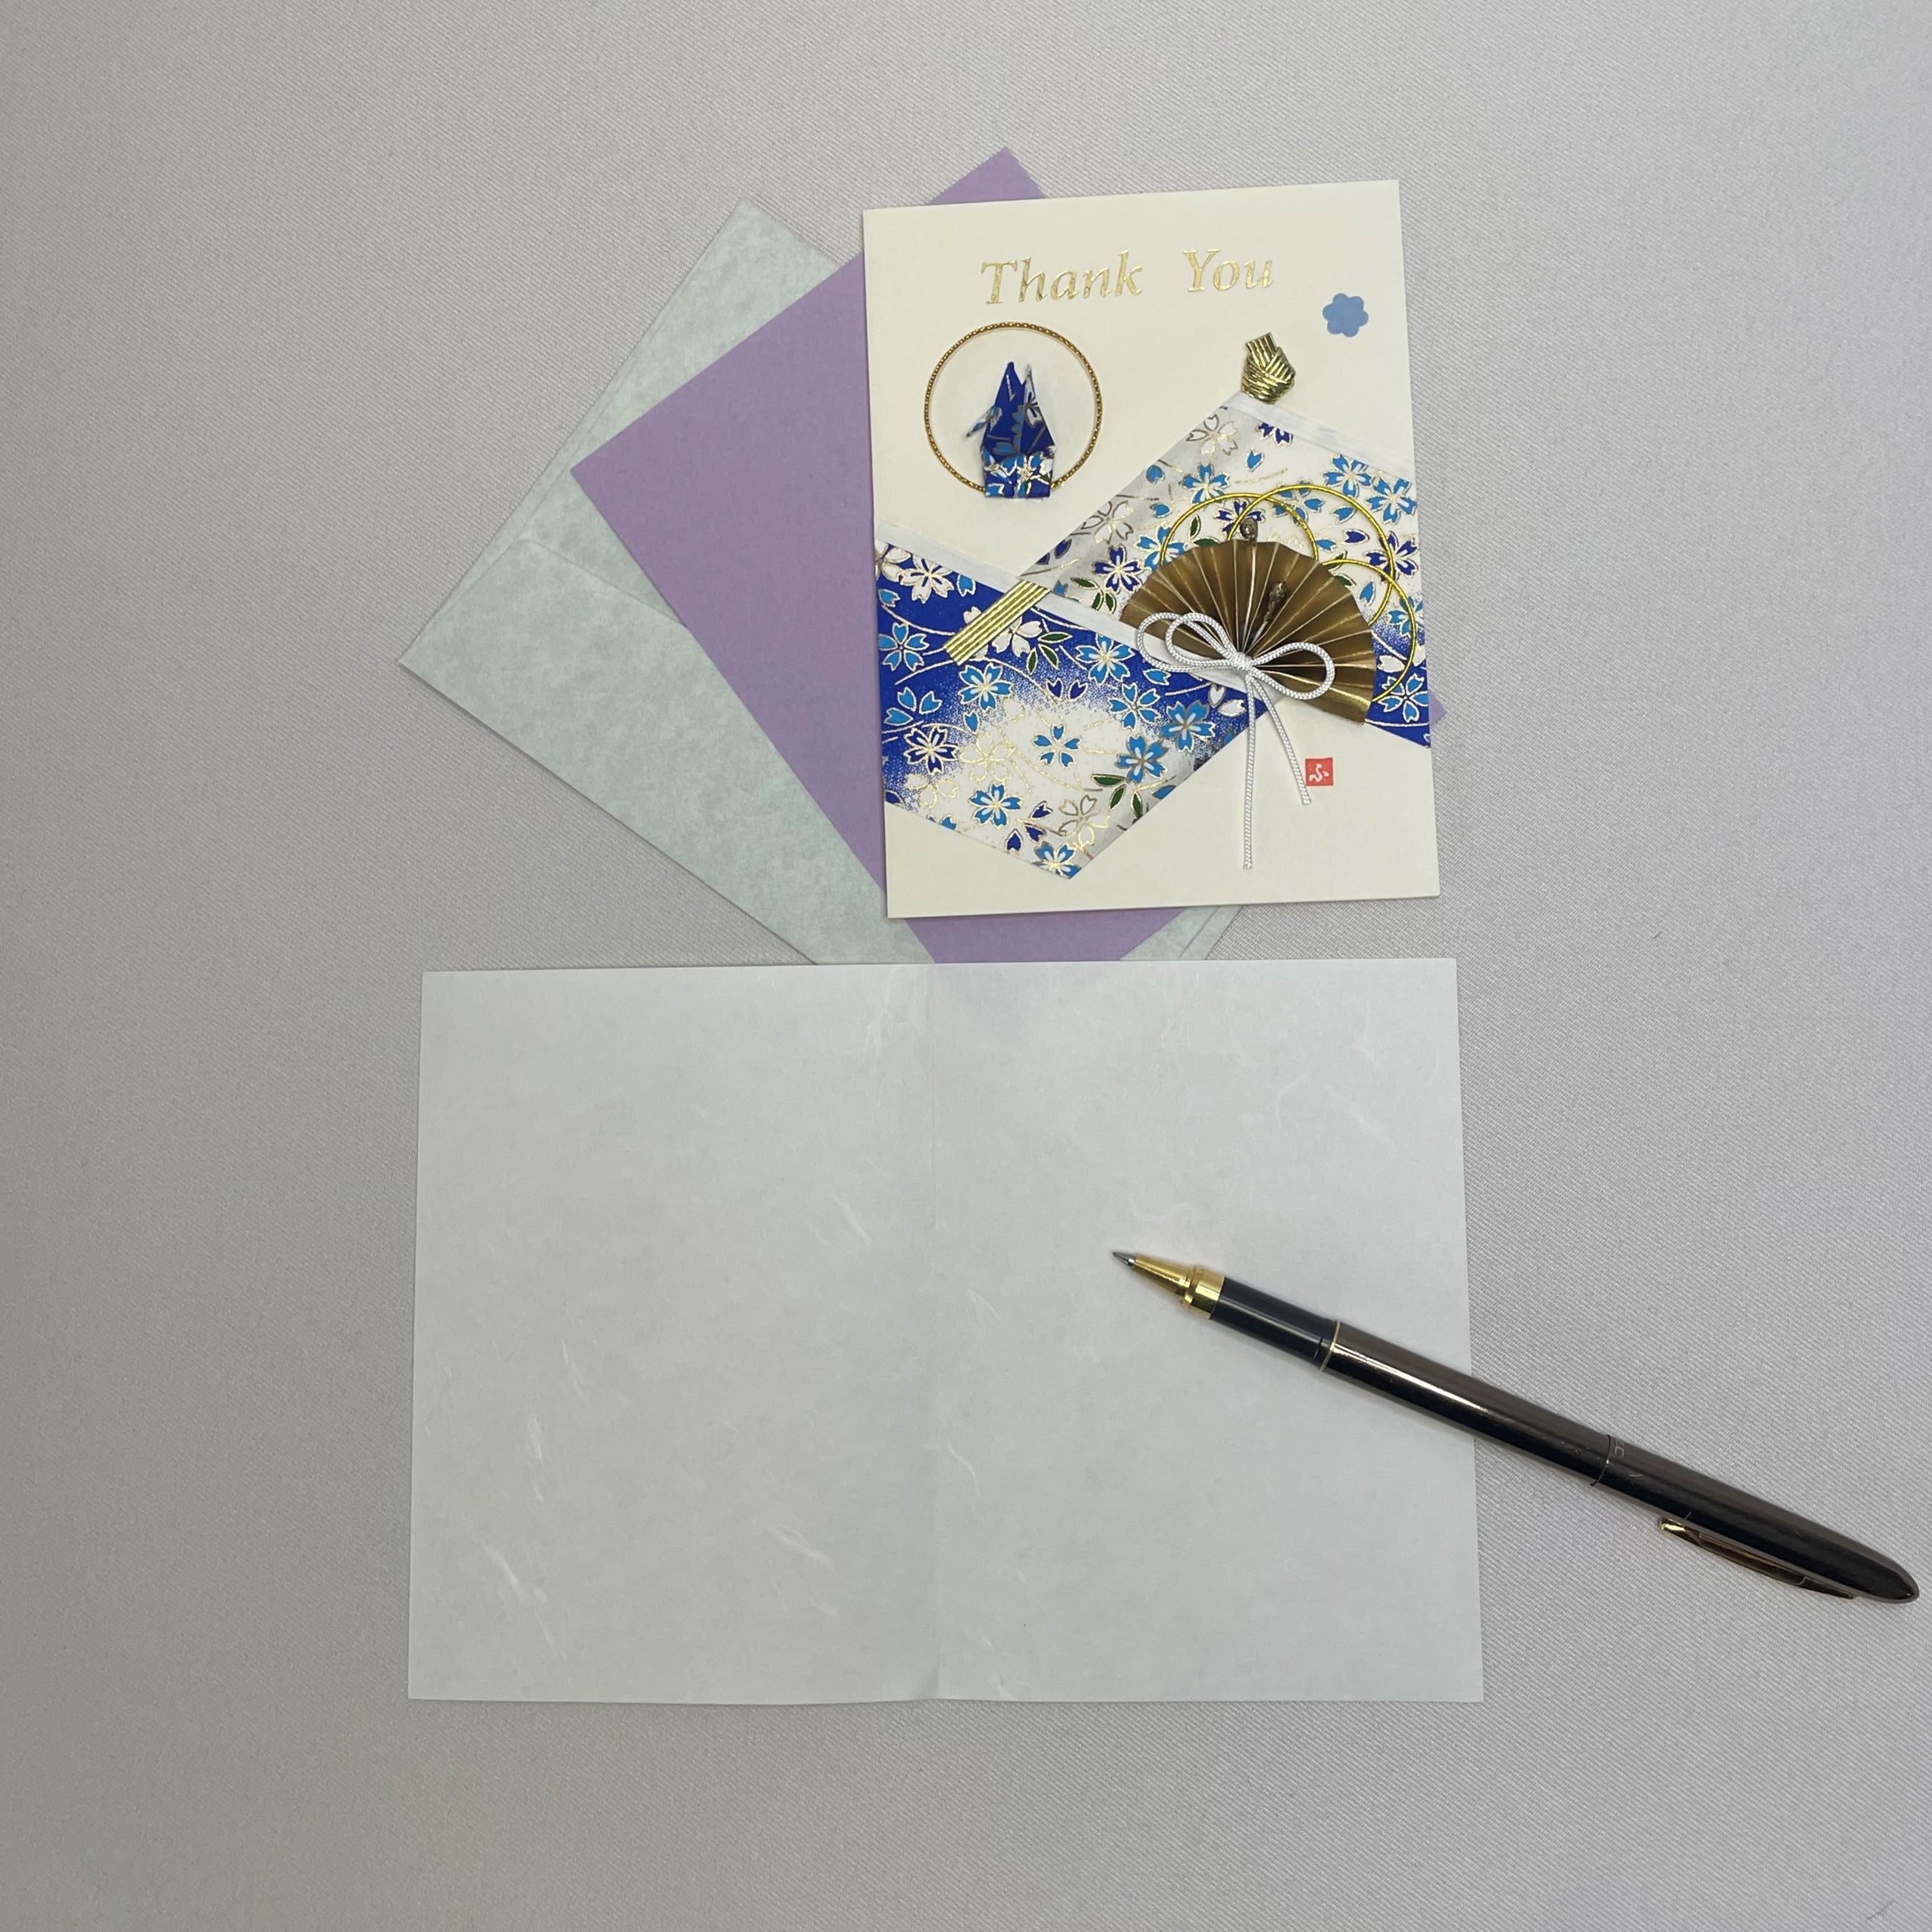 Handmade Greeting Card "Blue Crane (Thank you)"